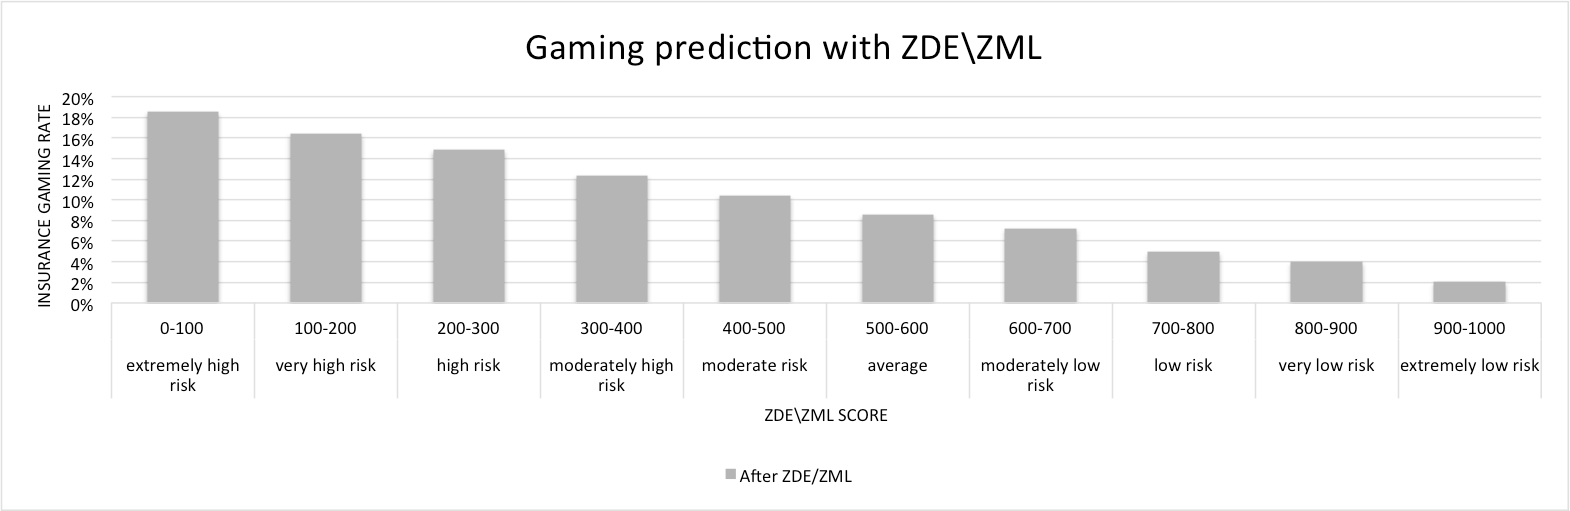 Gaming prediction with ZDE/ZML